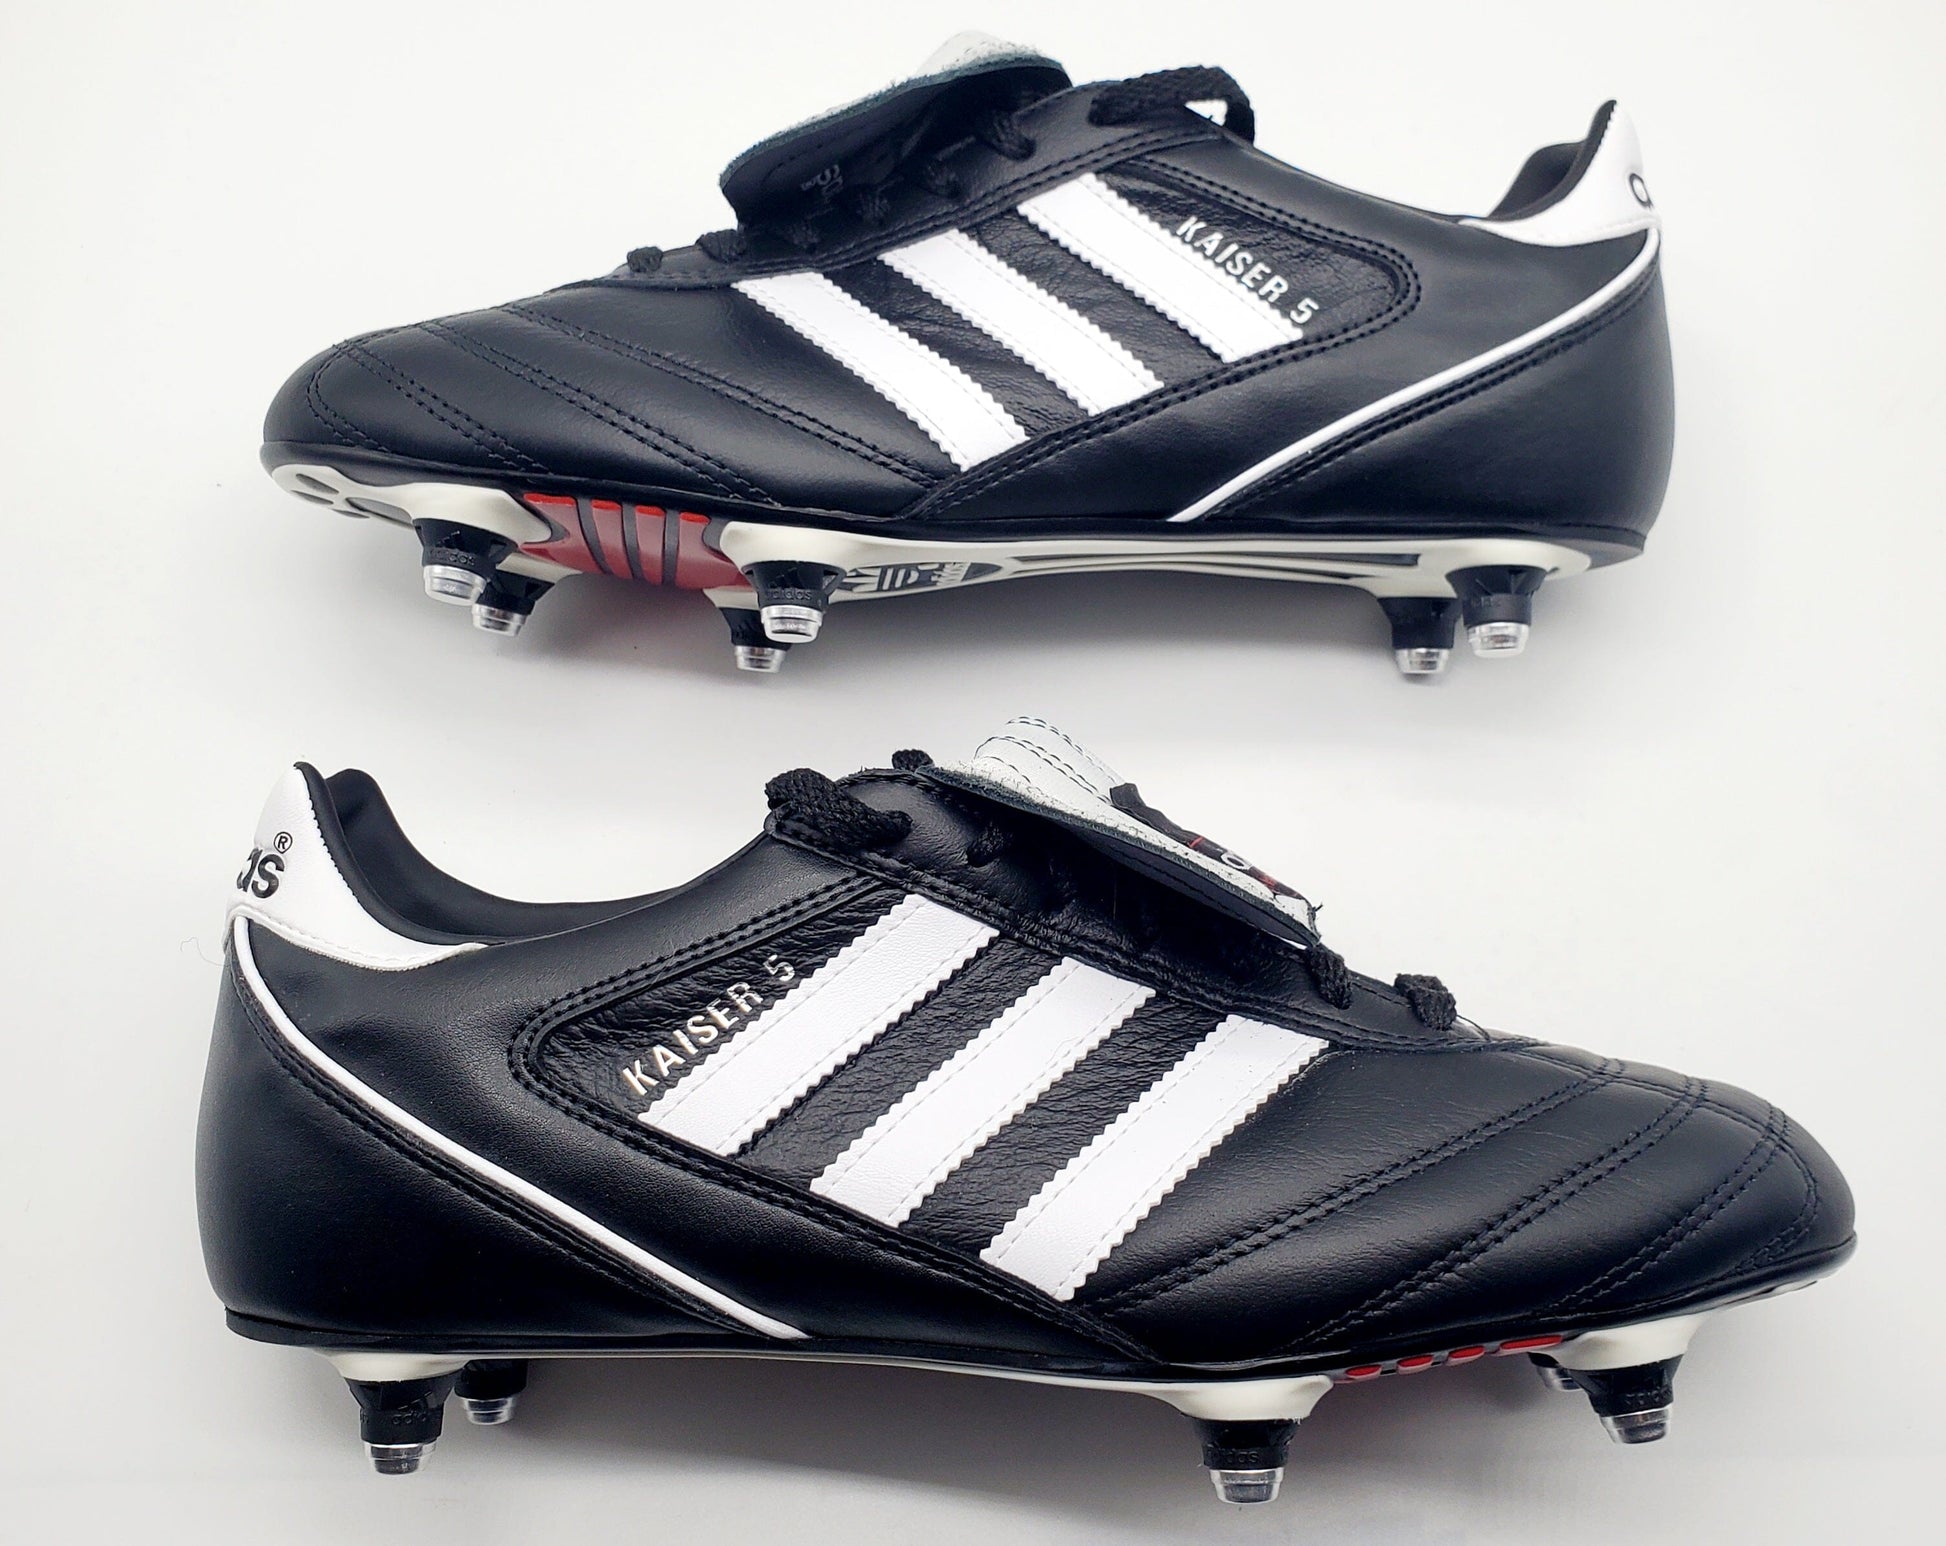 heredar Por harina Adidas Kaiser 5 Cup SG – Classic Football Boots Ltd